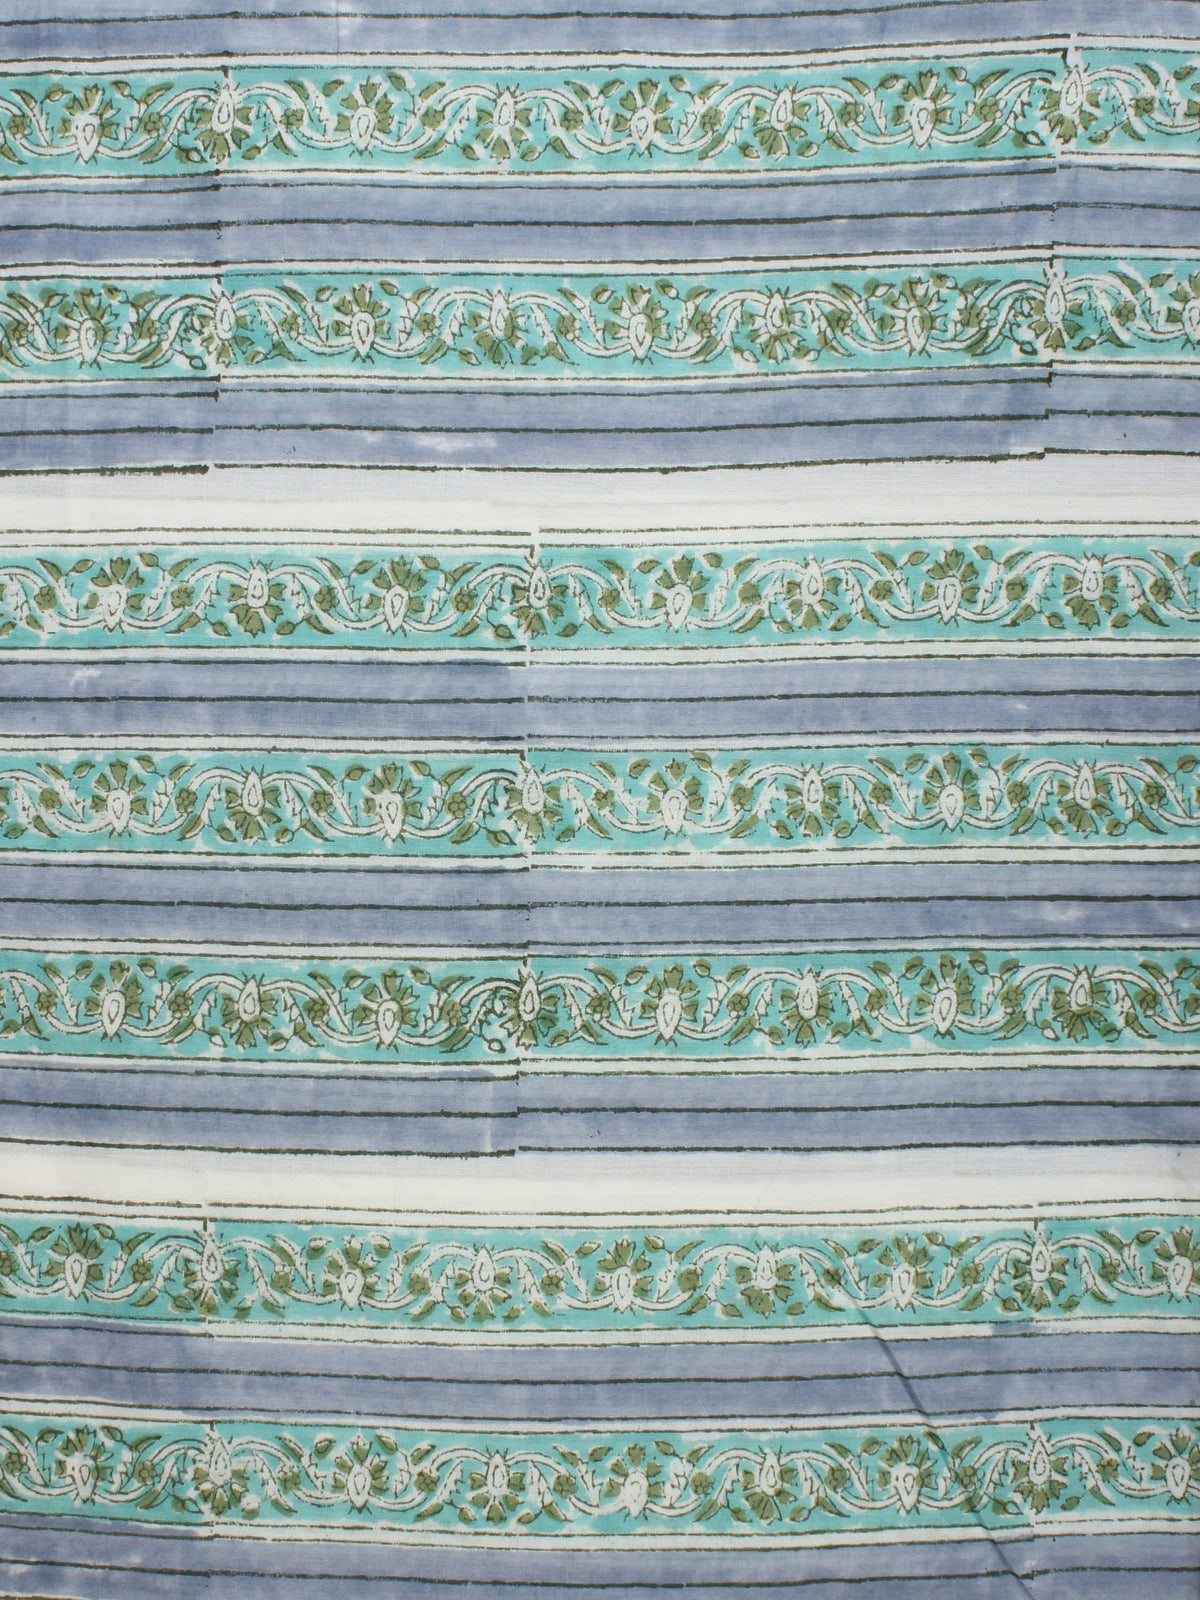 Sea Green White Grey Hand Block Printed Cotton Fabric Per Meter - F001F2228